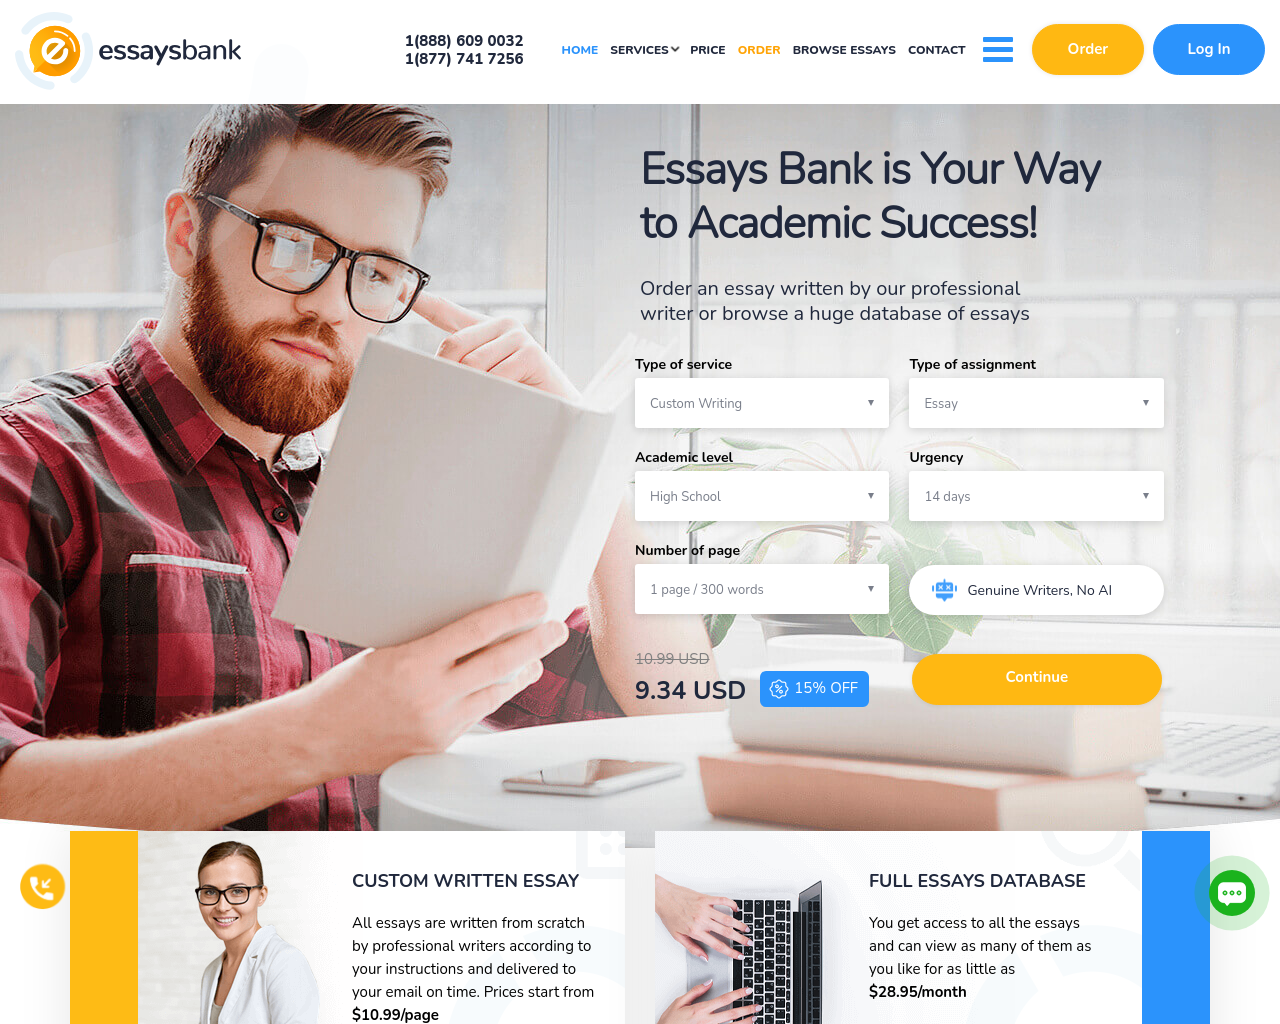 essaysbank.com